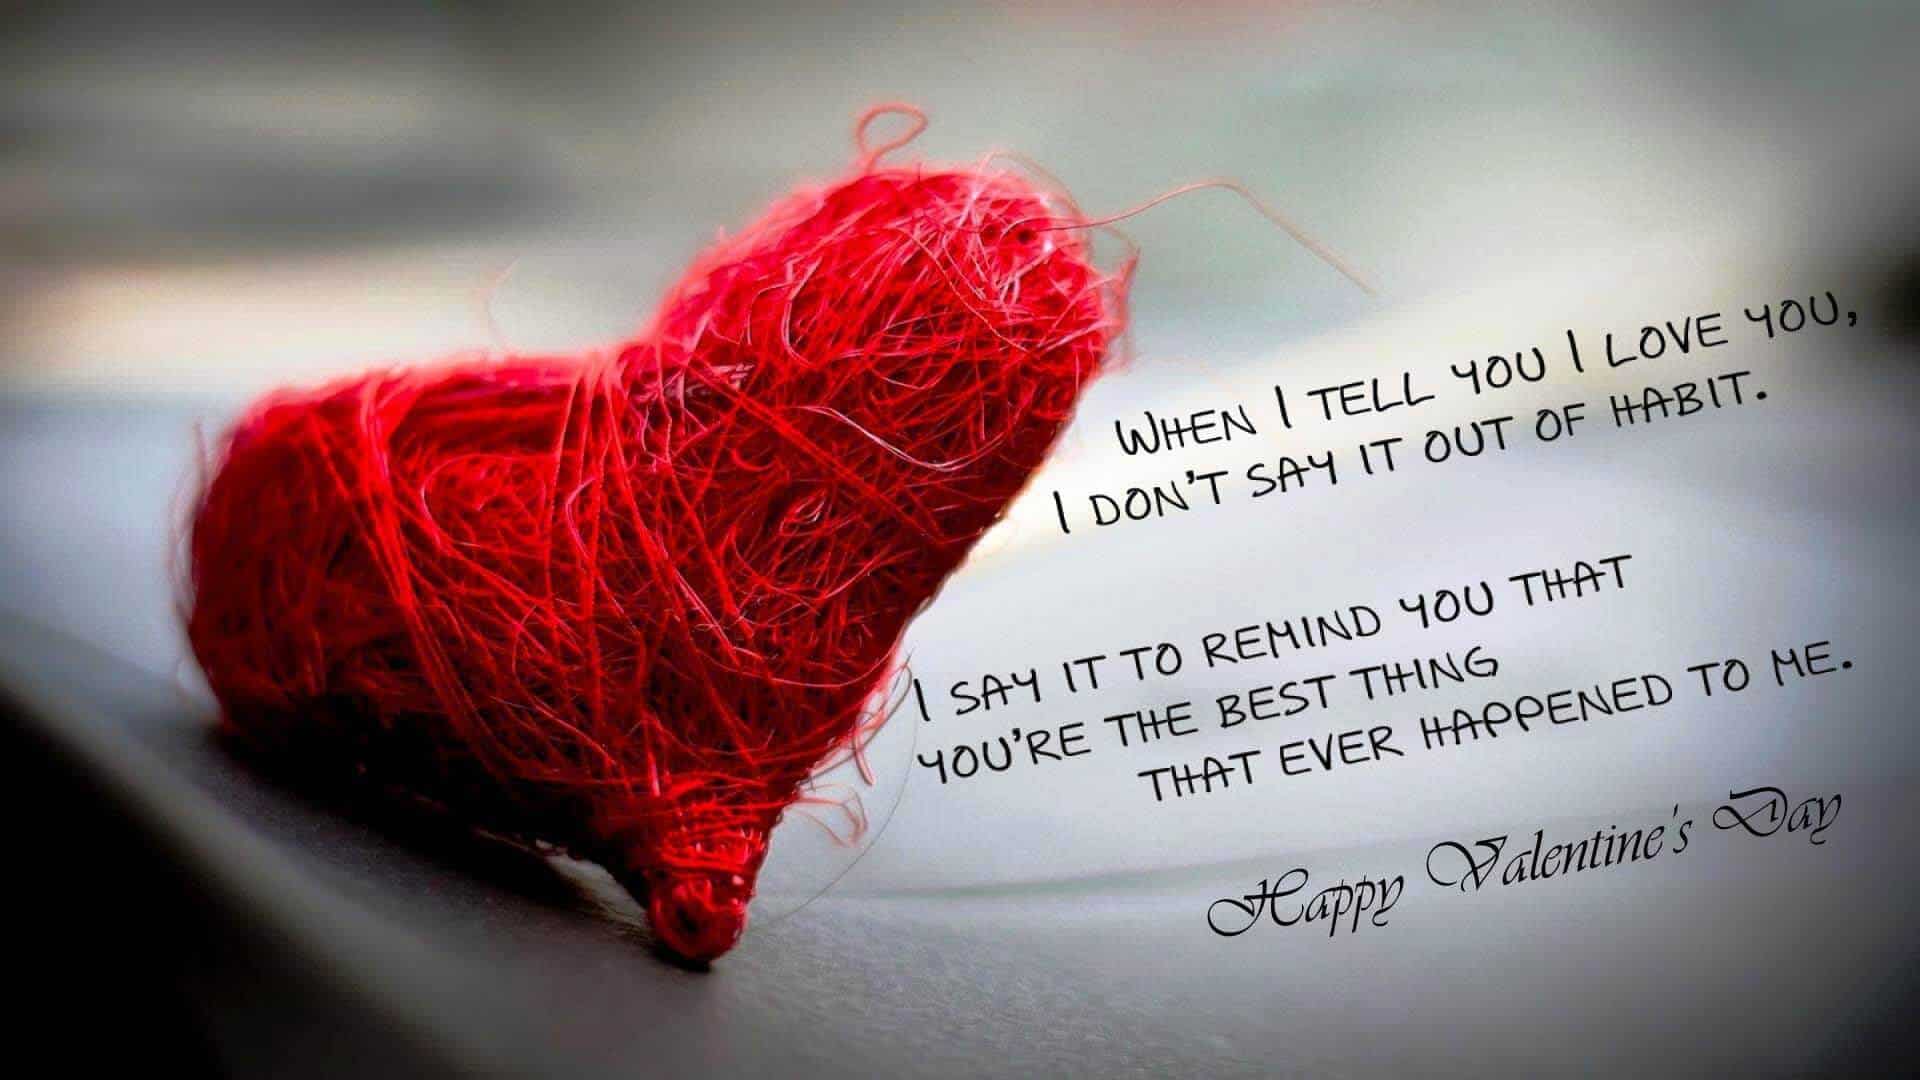 Romantic Valentine's Day Messages